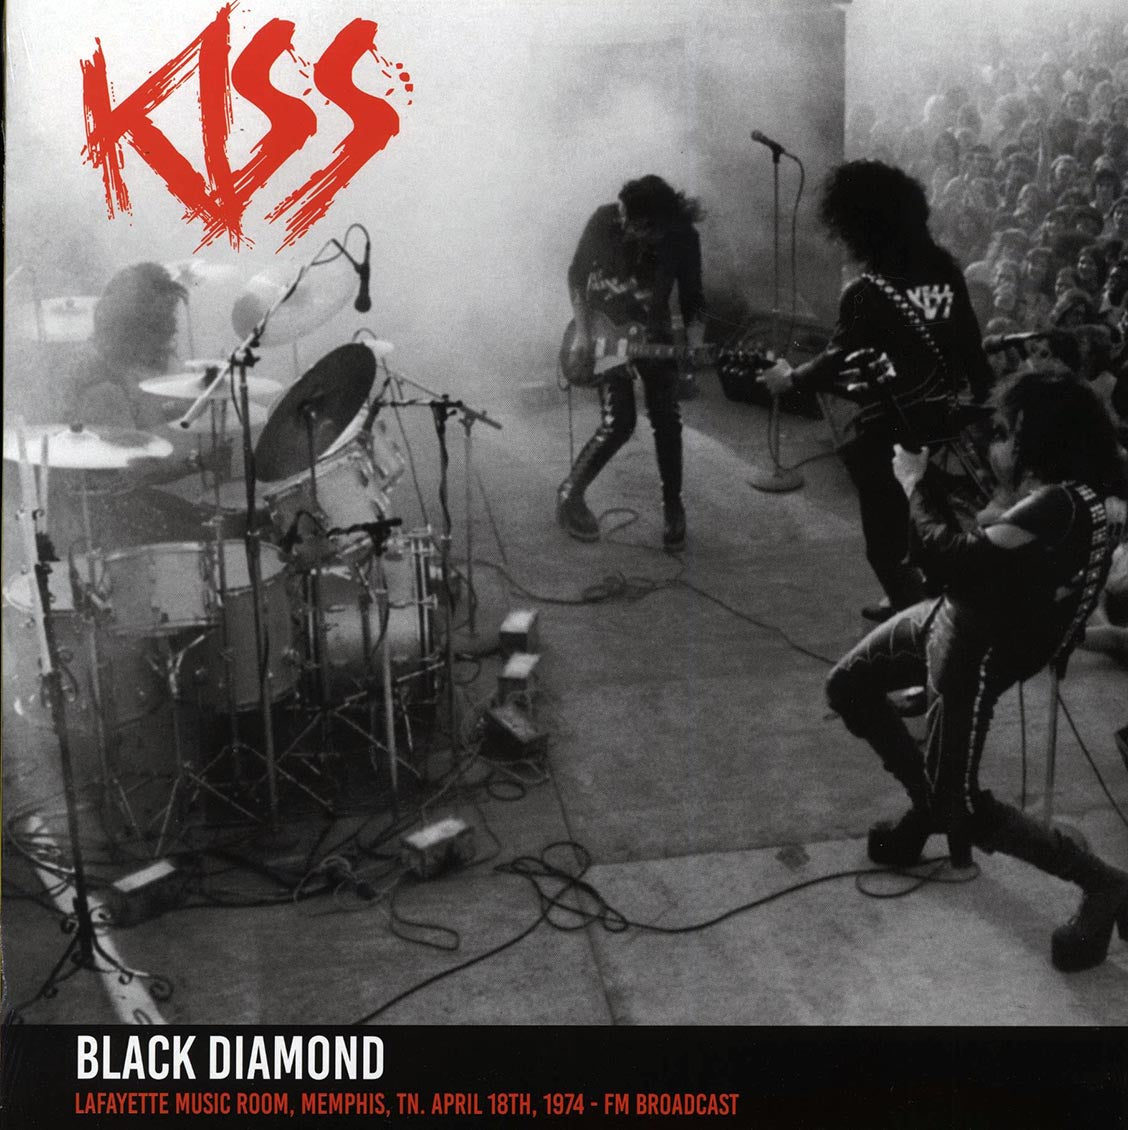 Kiss - Black Diamond: Lafayette Music Room, Memphis, TN, April 18th, 1974 FM Broadcast (ltd. 500 copies made) - Vinyl LP